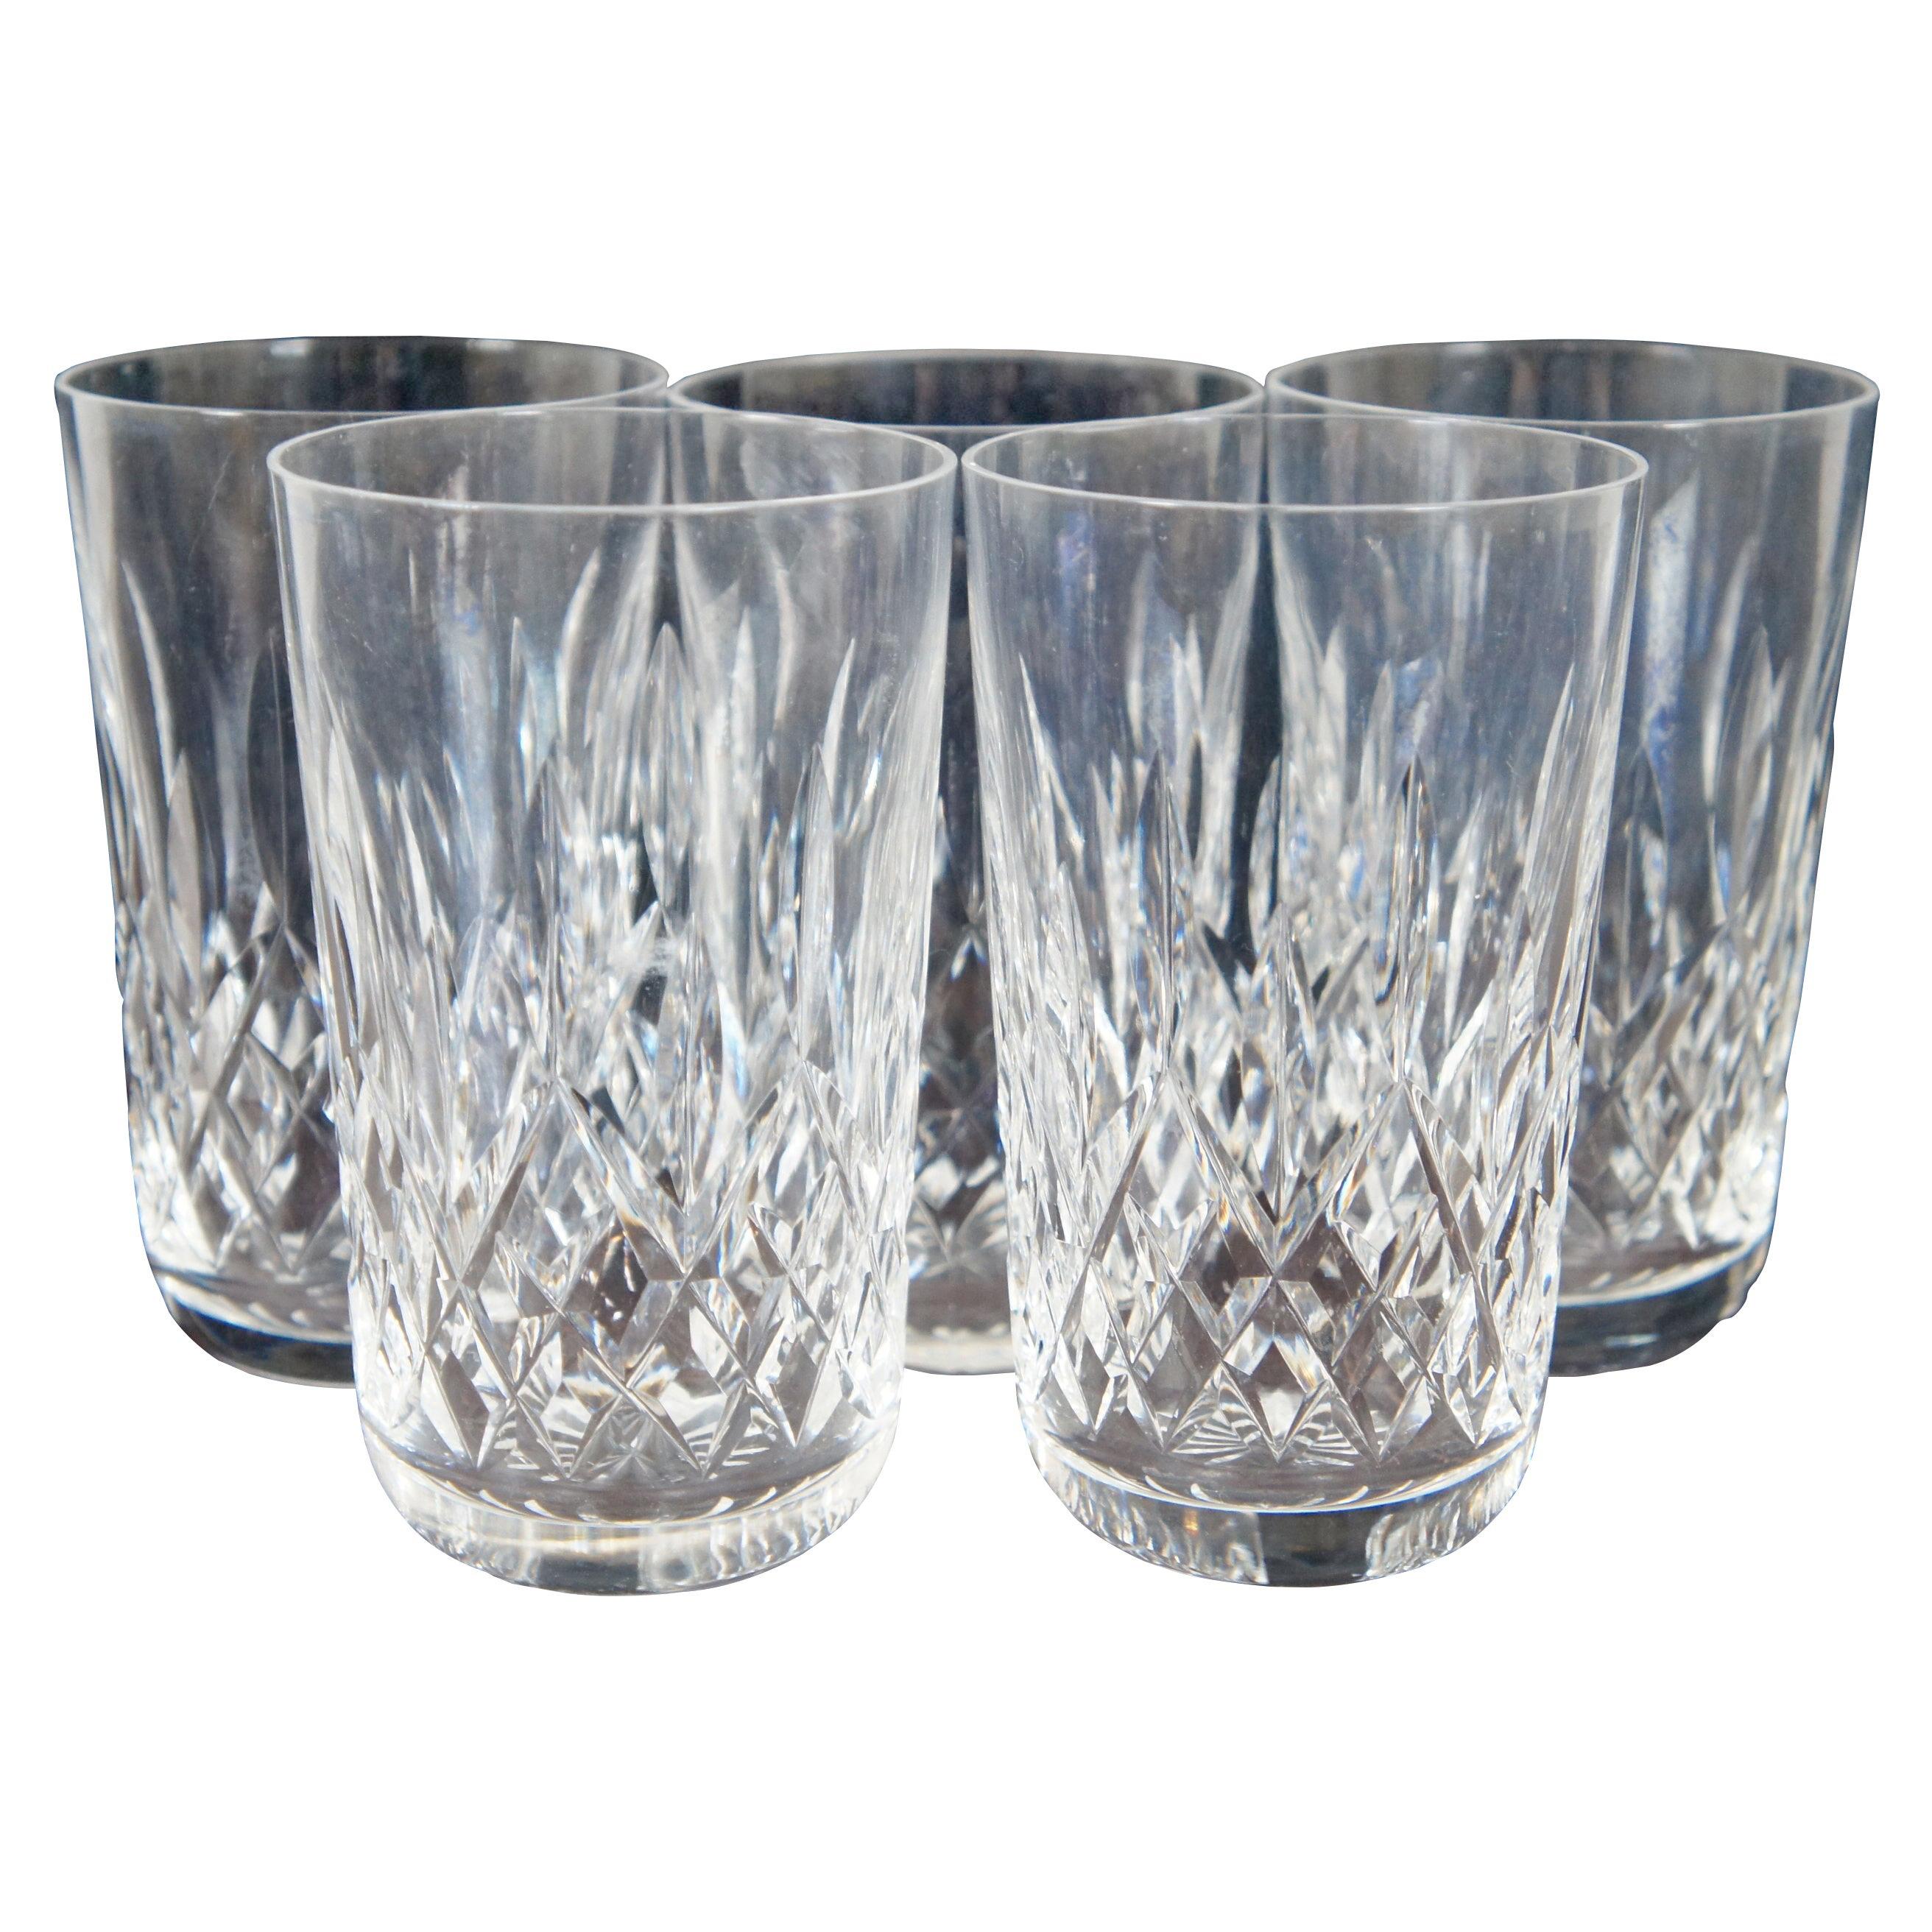 5 Vintage Waterford Crystal Lismore Tumblers High Ball Water Juice Glasses 12 Oz